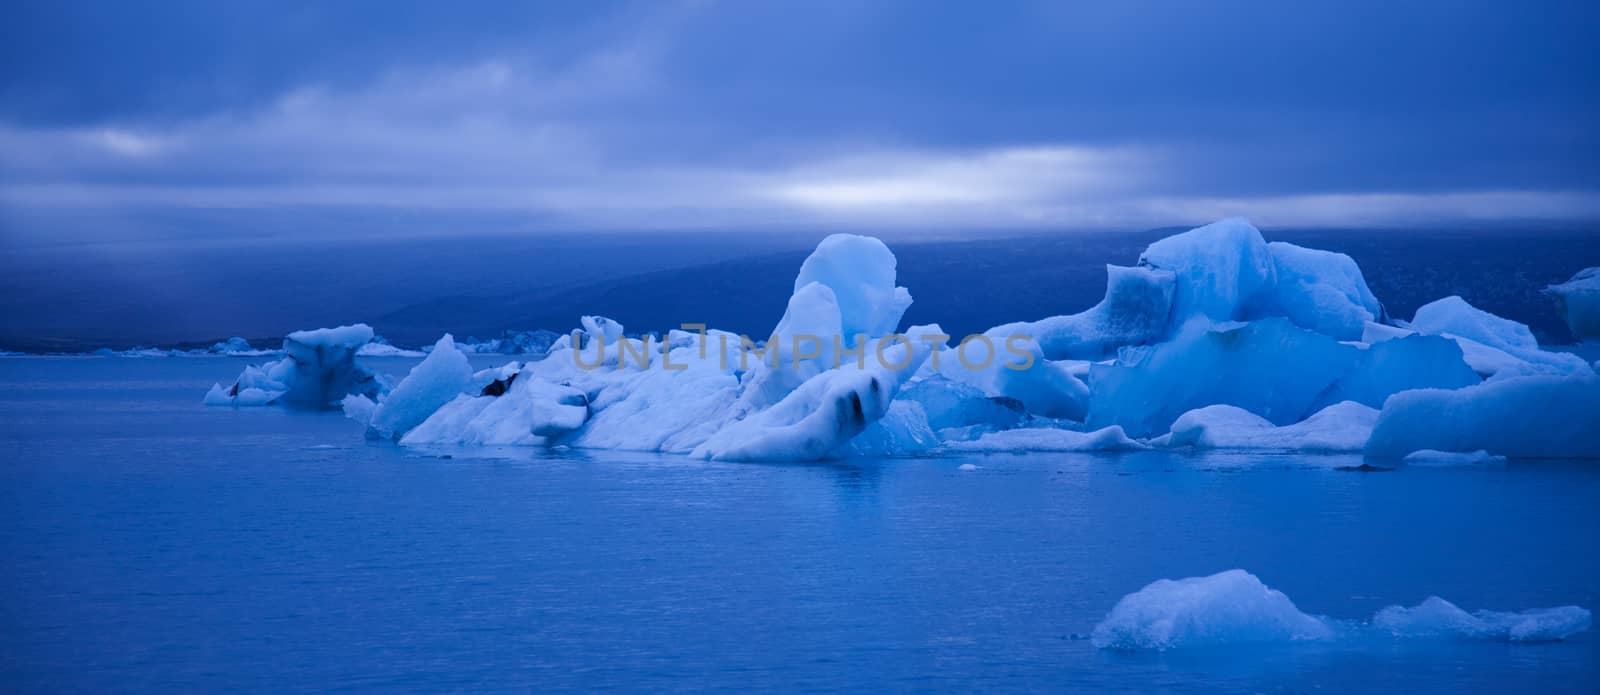 Lake iceland, bright colorful vivid theme